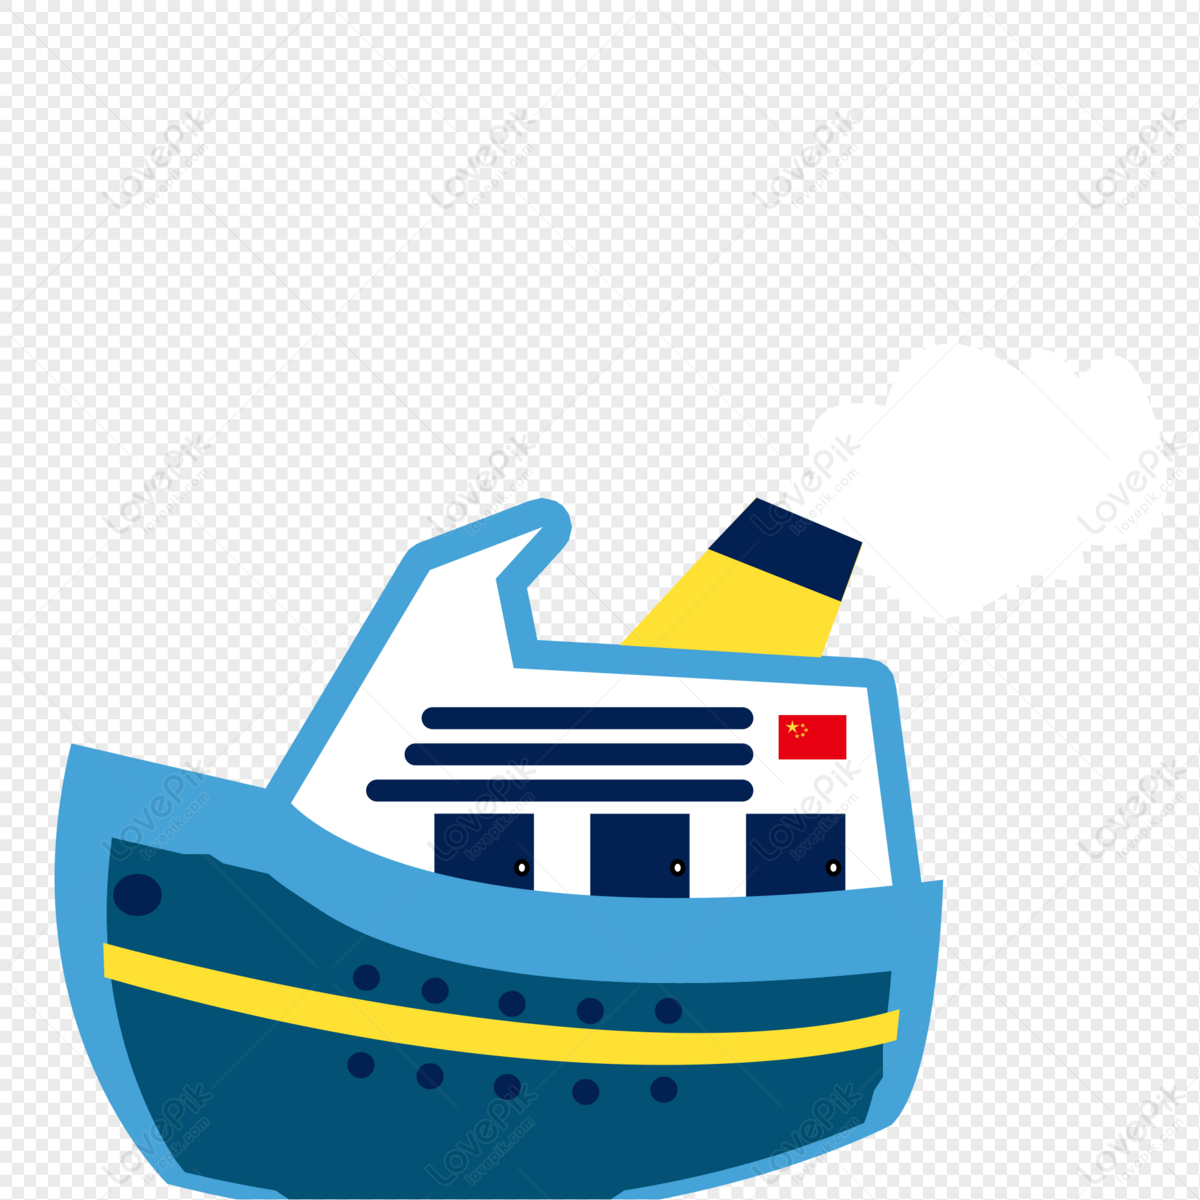 Cruise ship, cartoon ship, blue ship, ship vector png transparent background